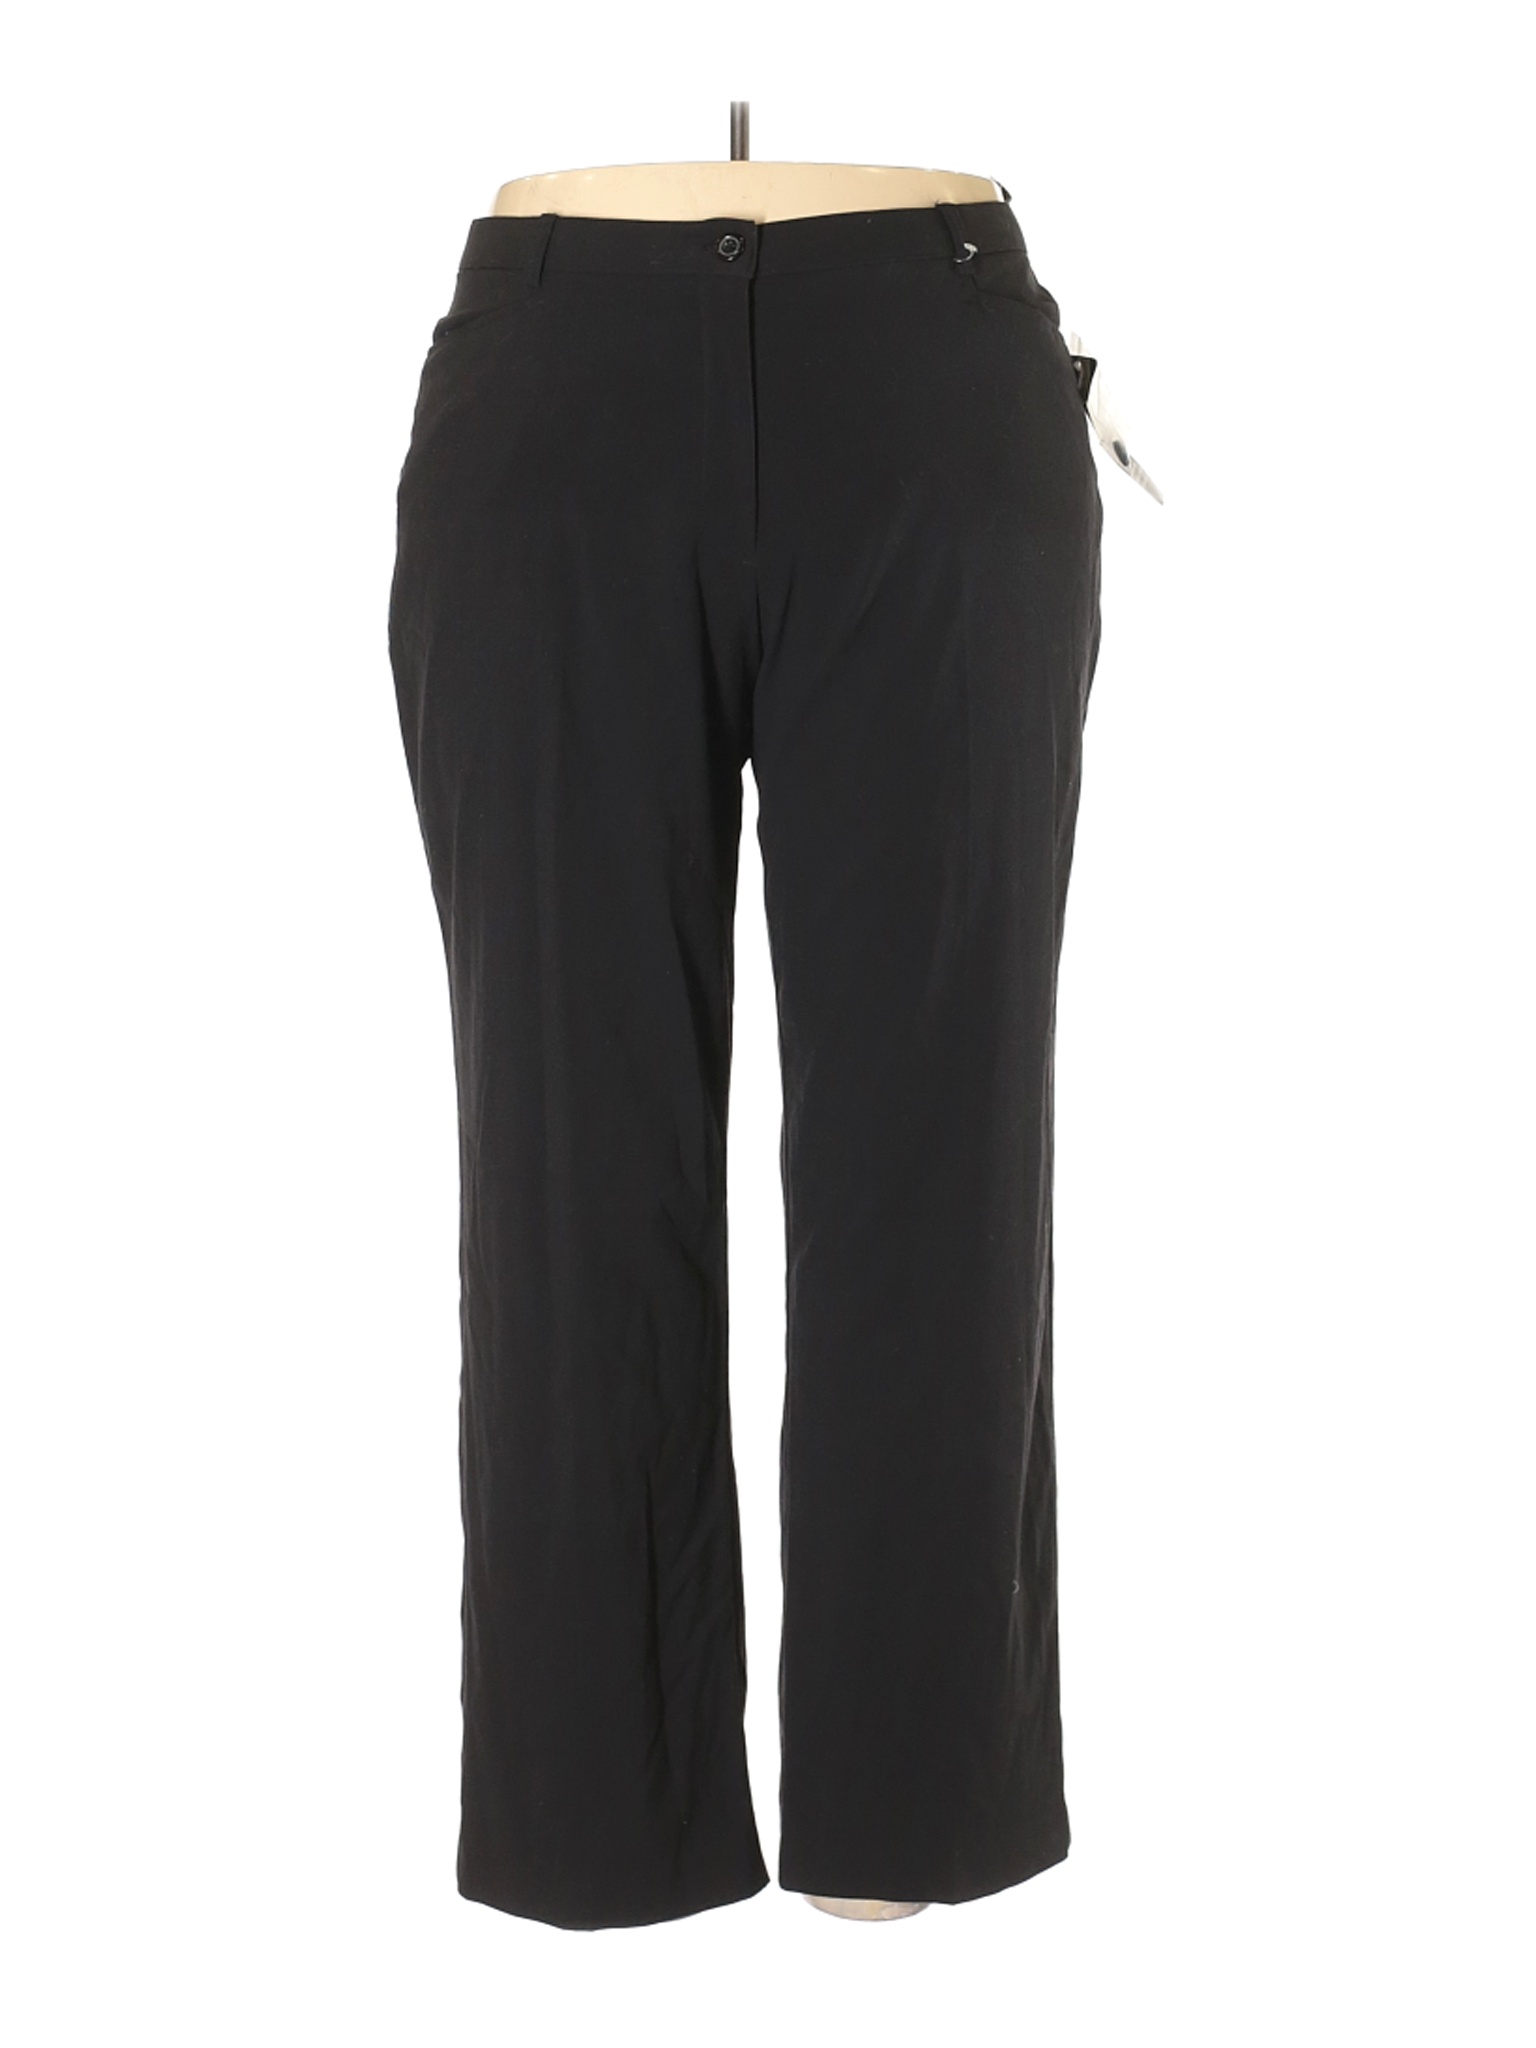 NWT George Women Black Dress Pants 20 Plus | eBay